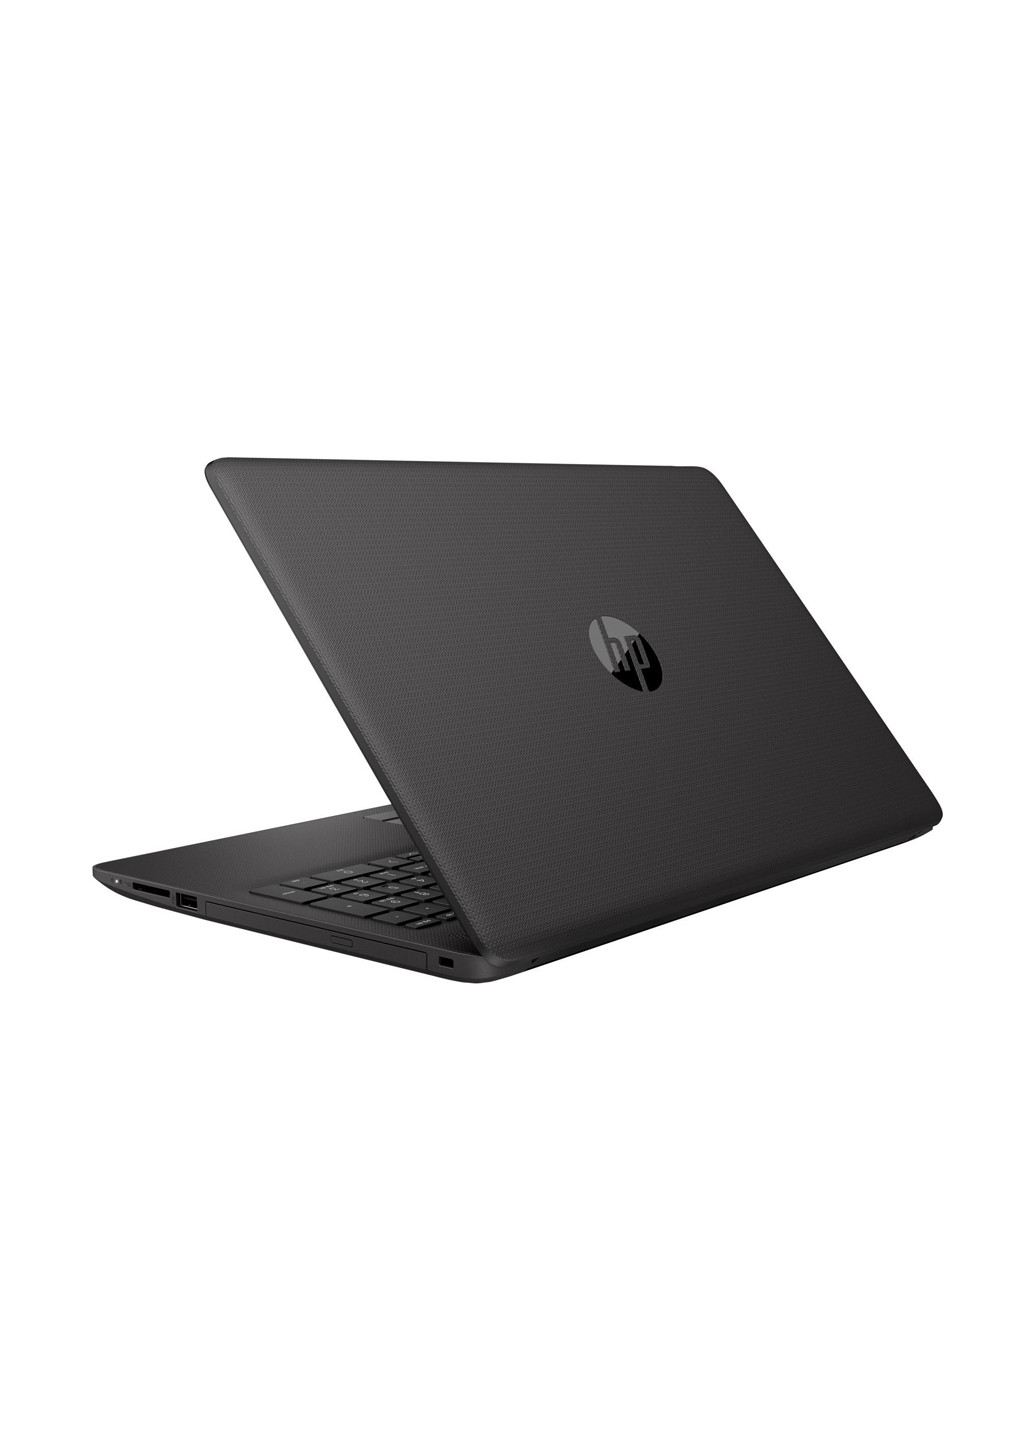 Ноутбук HP 255 g7 (6bn08ea) dark ash silver (158838101)